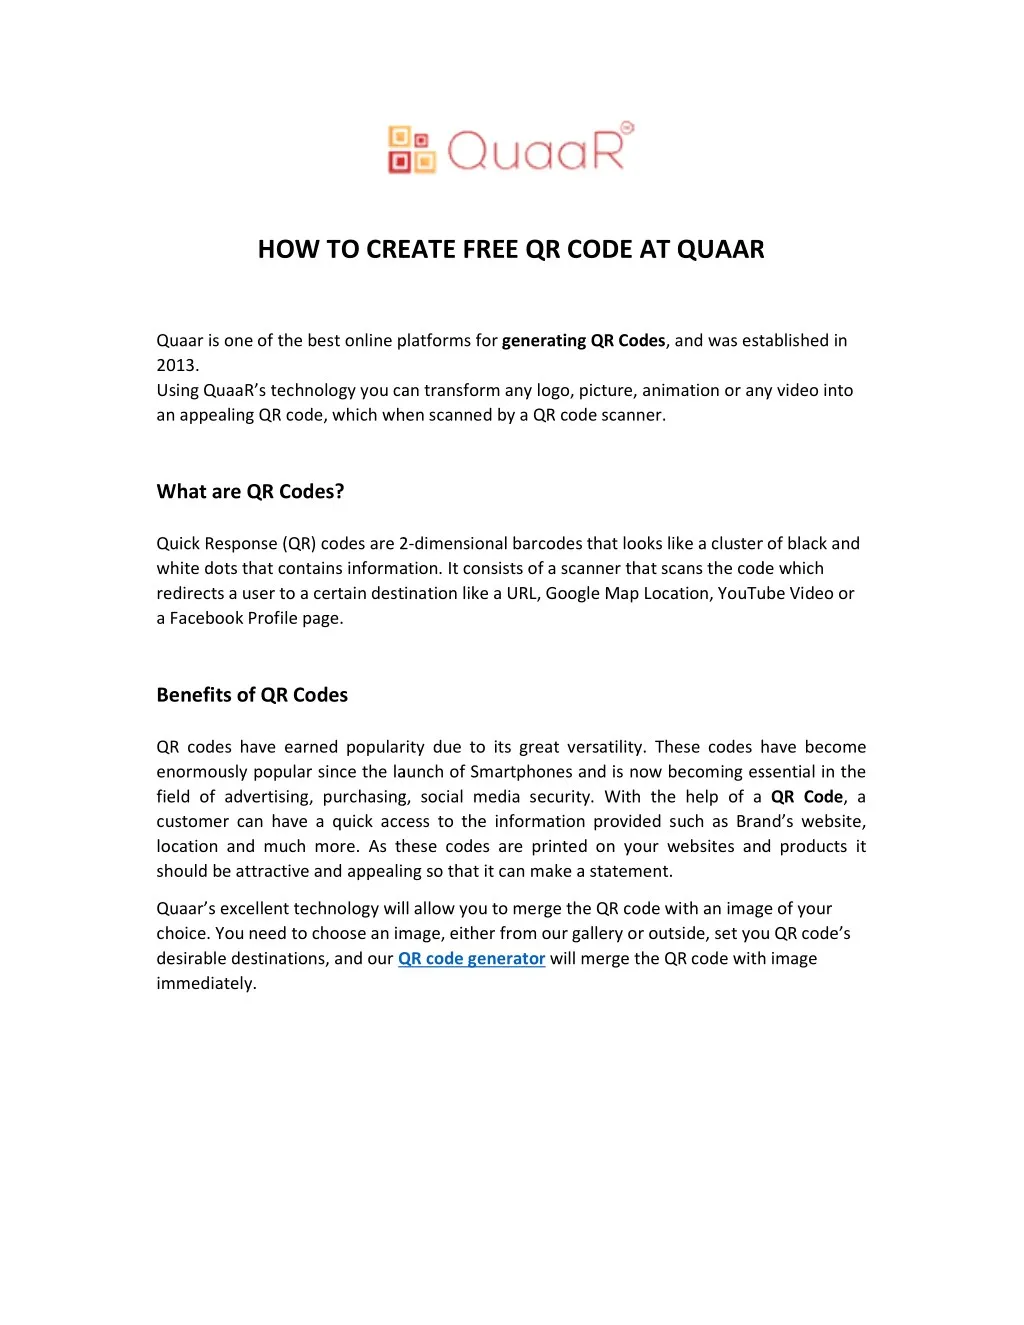 how to create free qr code at quaar